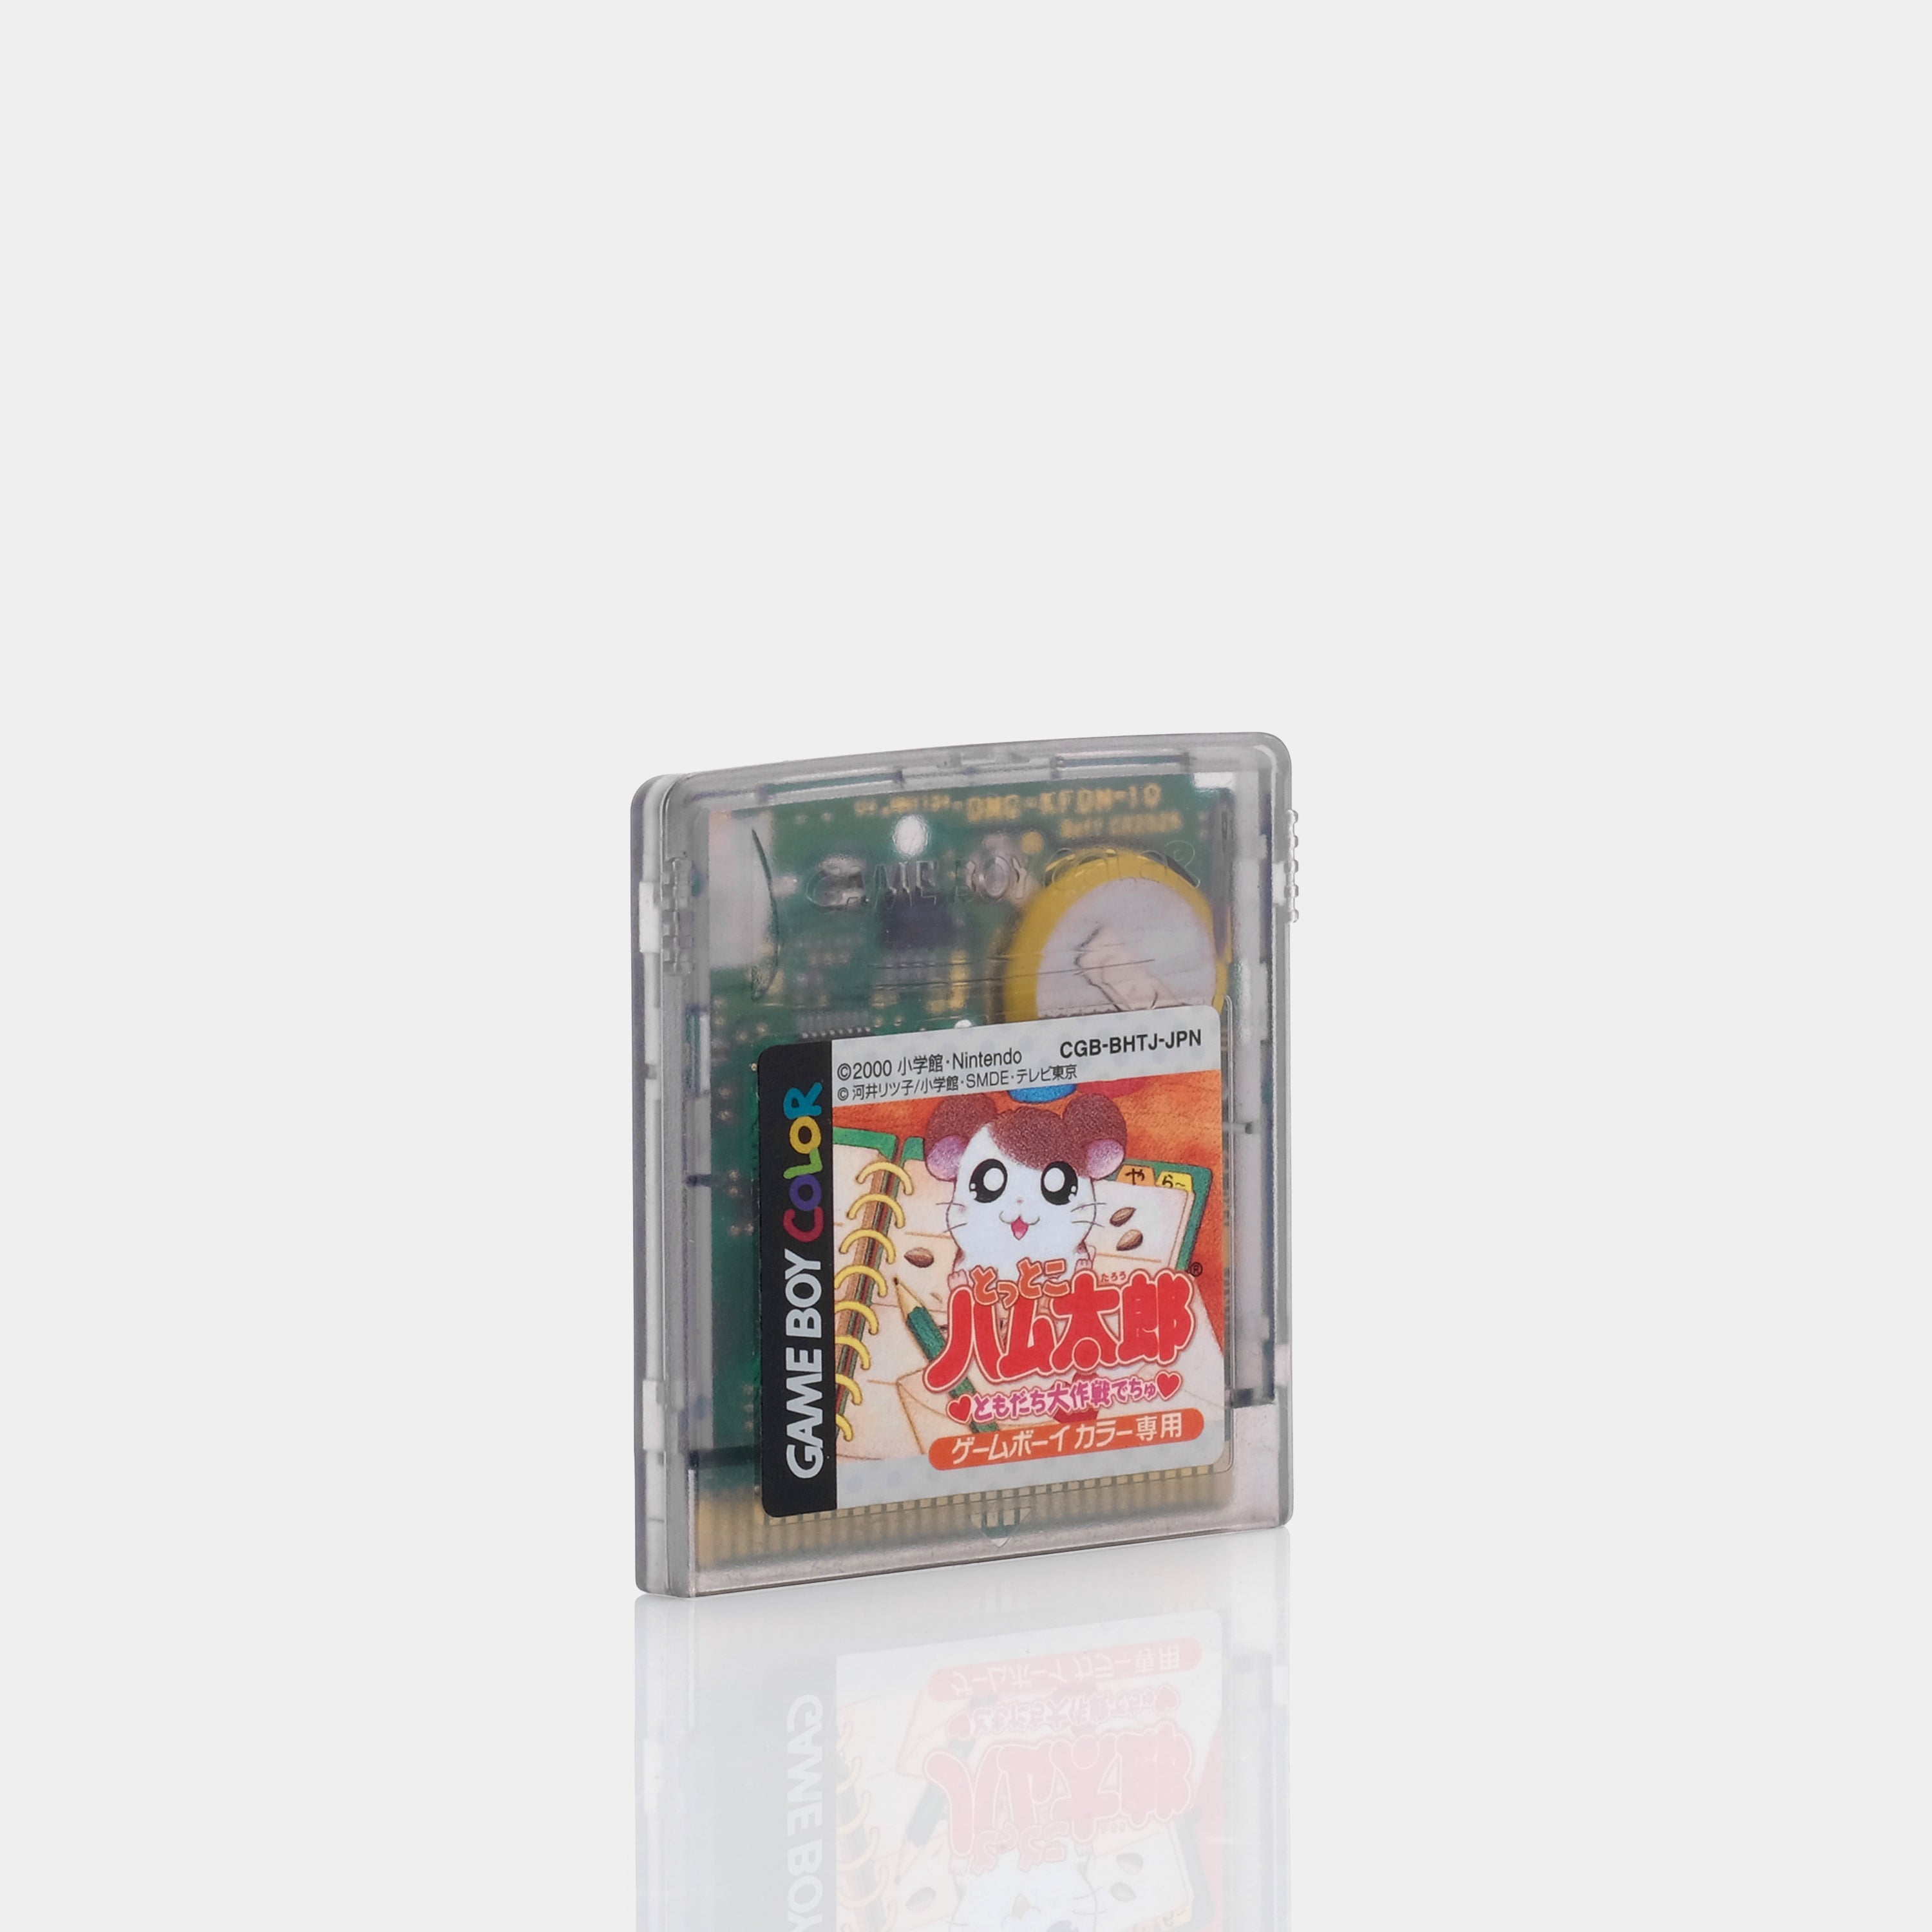 Tottoko Hamtaro: Tomodachi Daisakusen Dechu とっとこハム太郎 ともだち大作戦でちゅ (Japanese Version) Game Boy Color Game